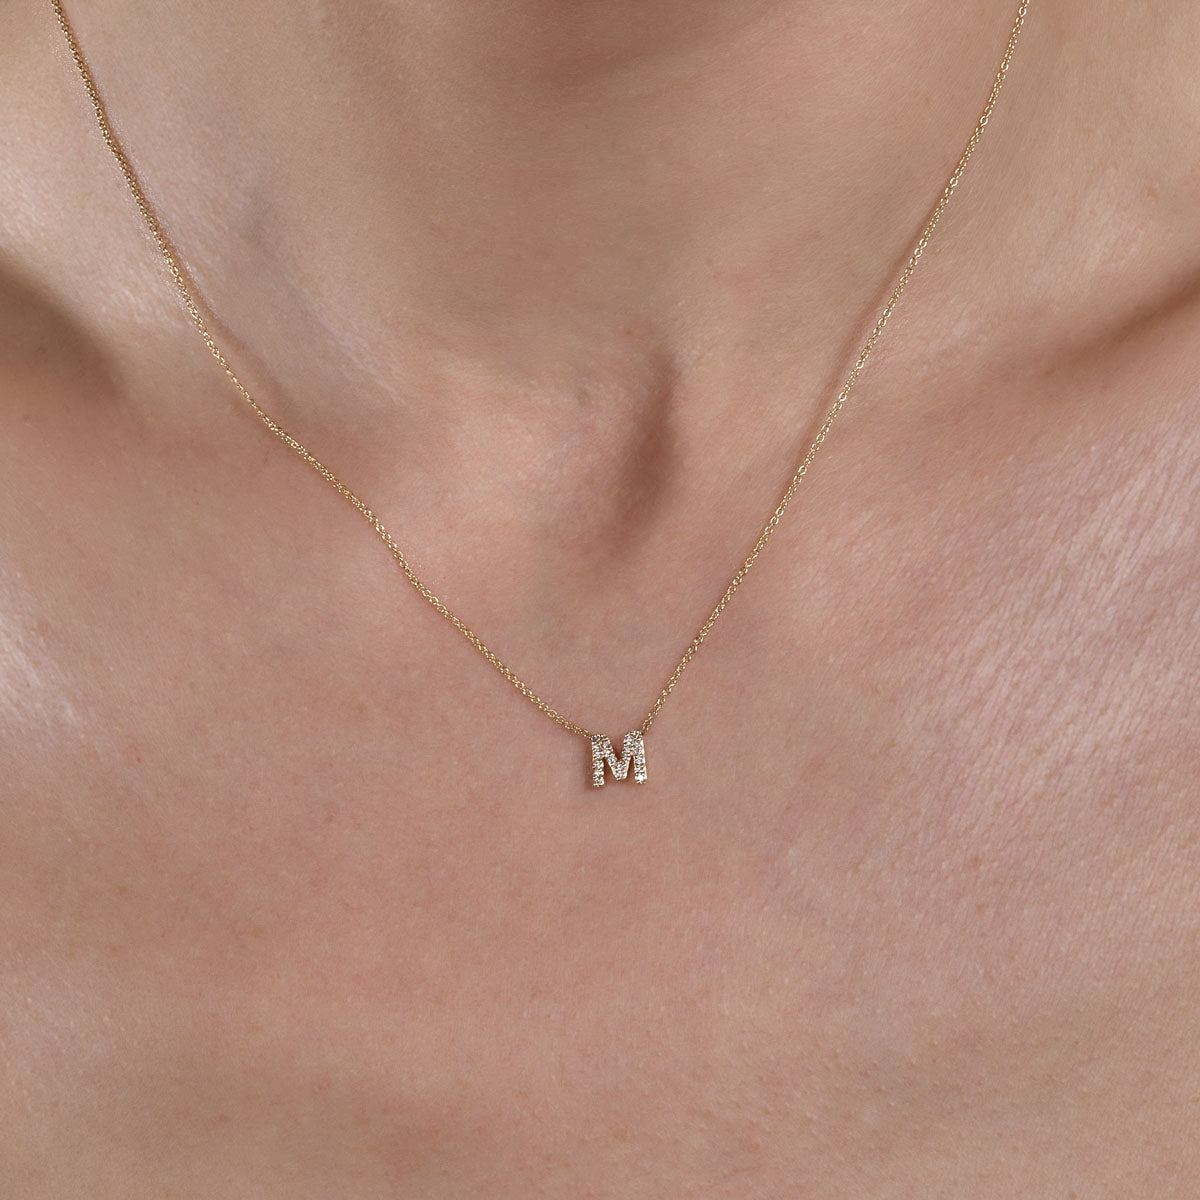 14k Gold Initial Heart Necklace - Zoe Lev Jewelry